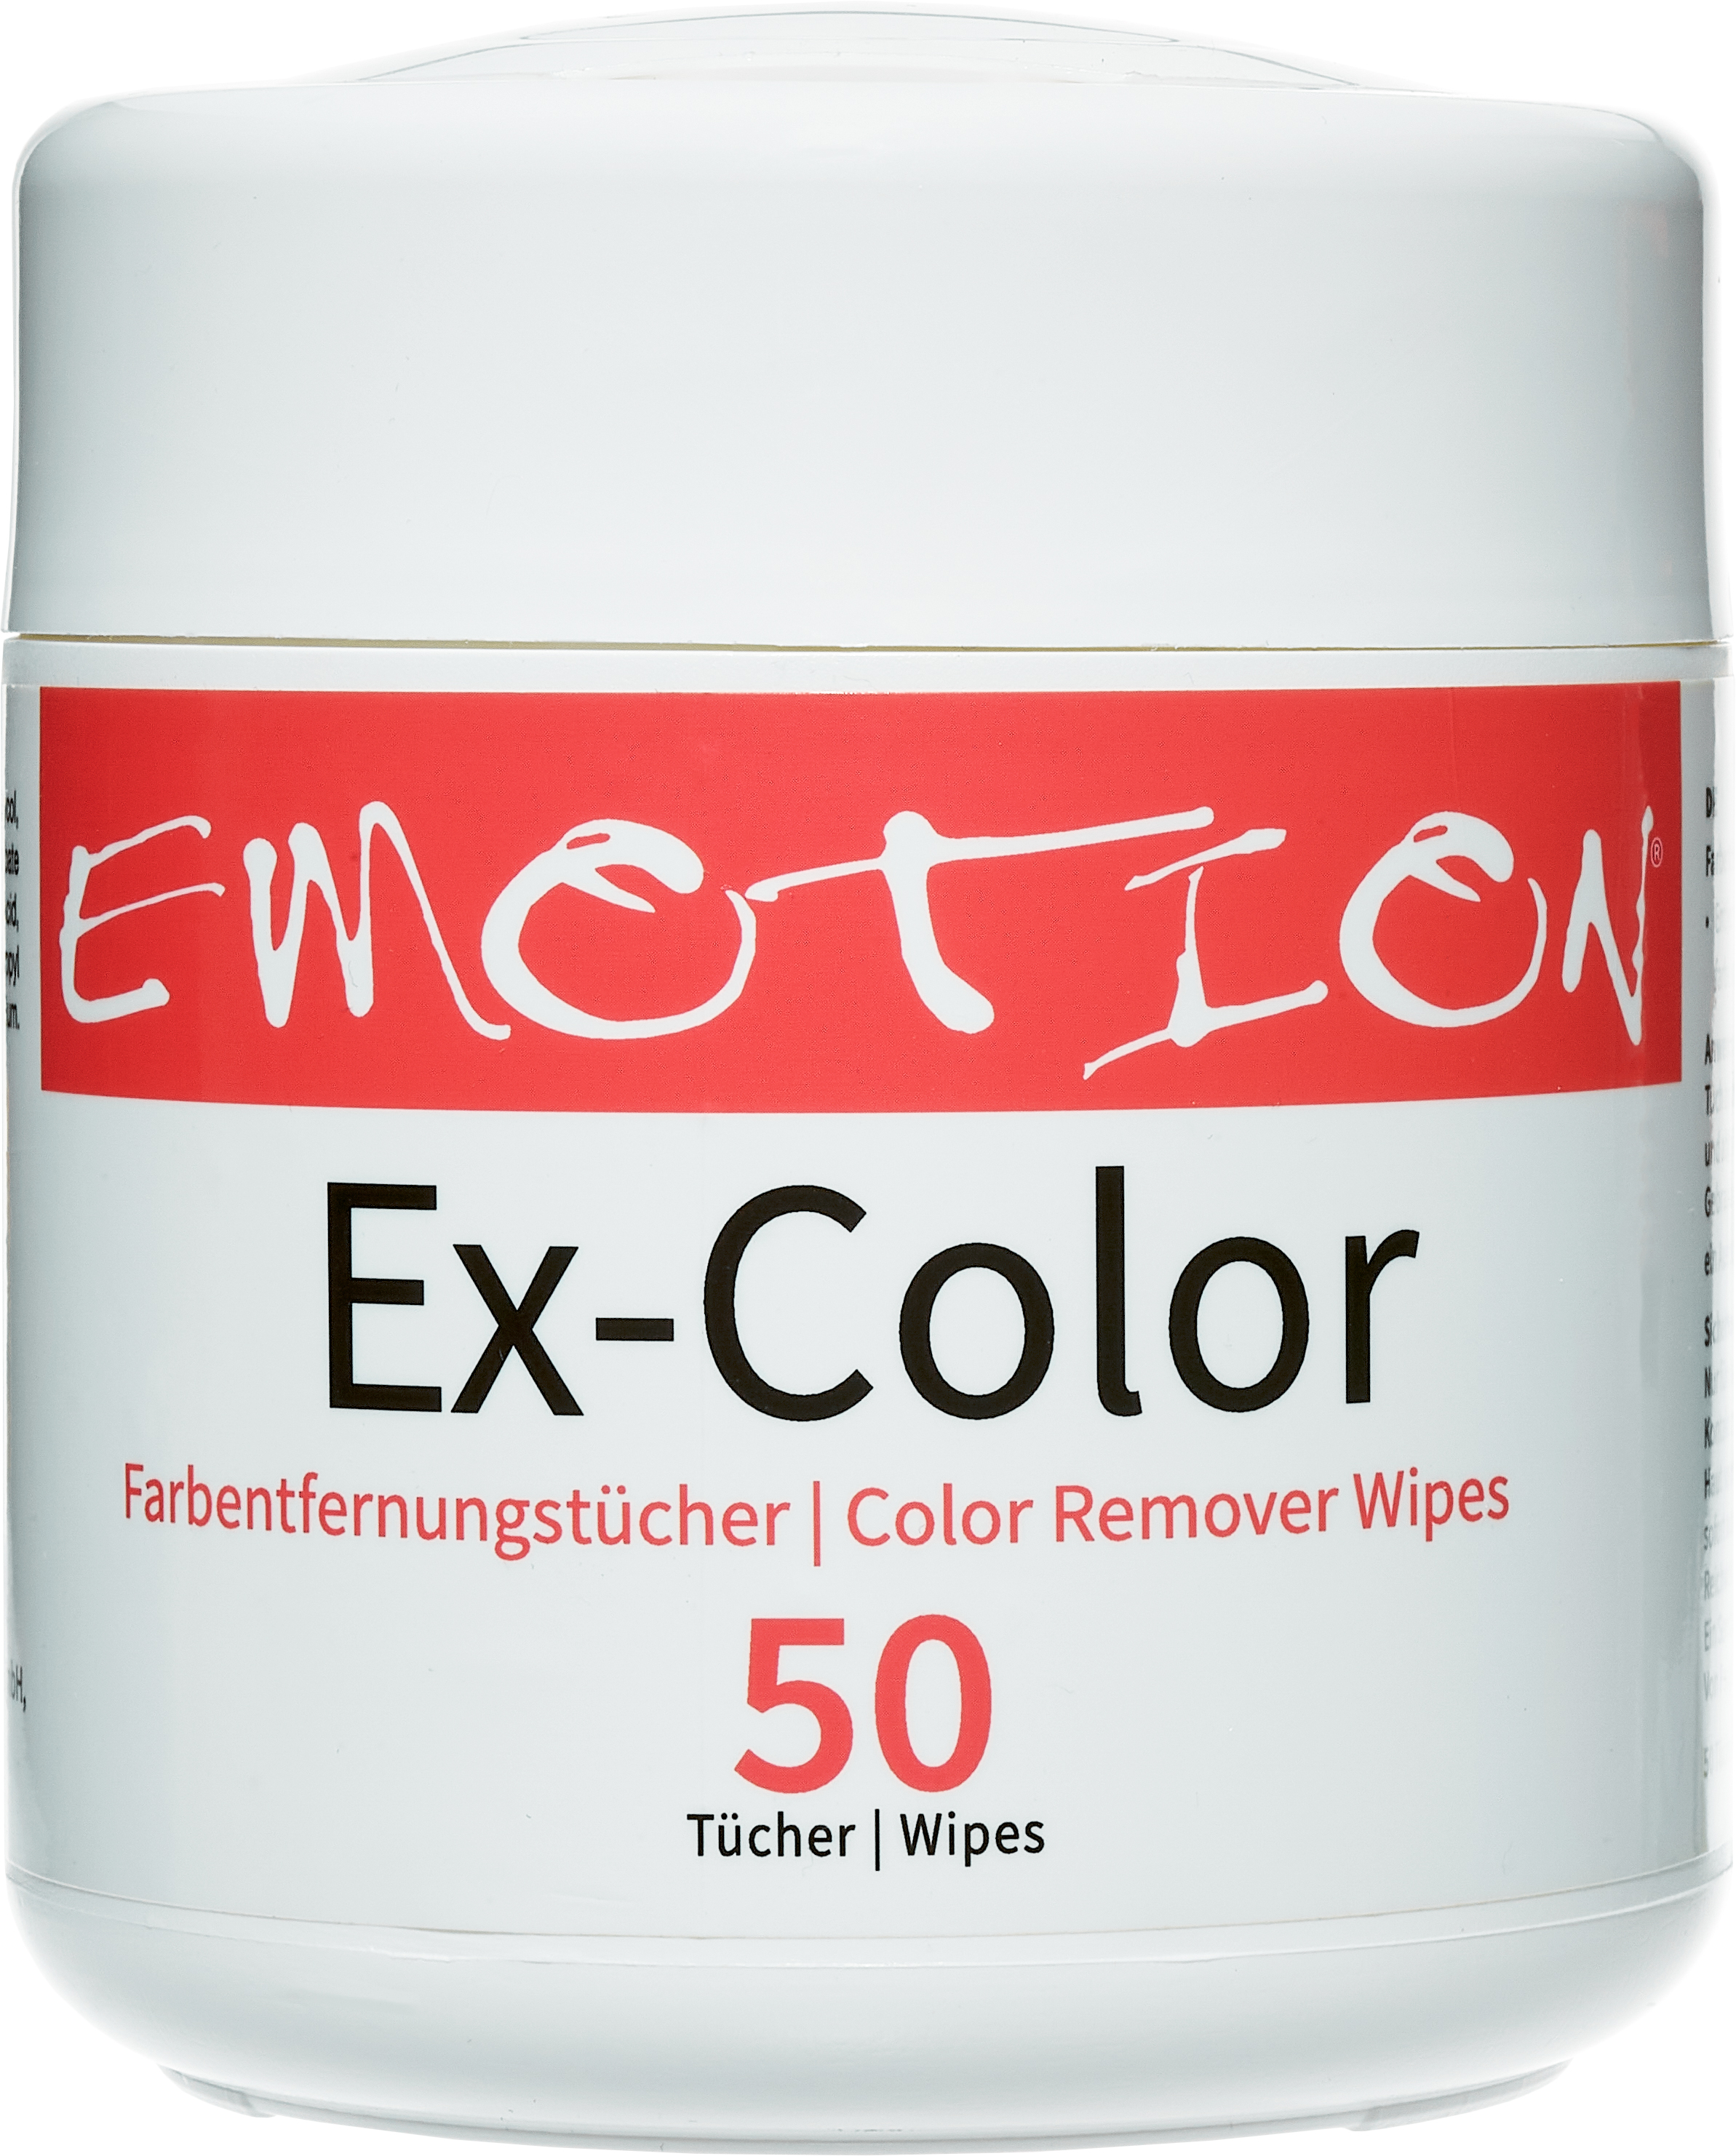 EX-COLOR Color remover wipes